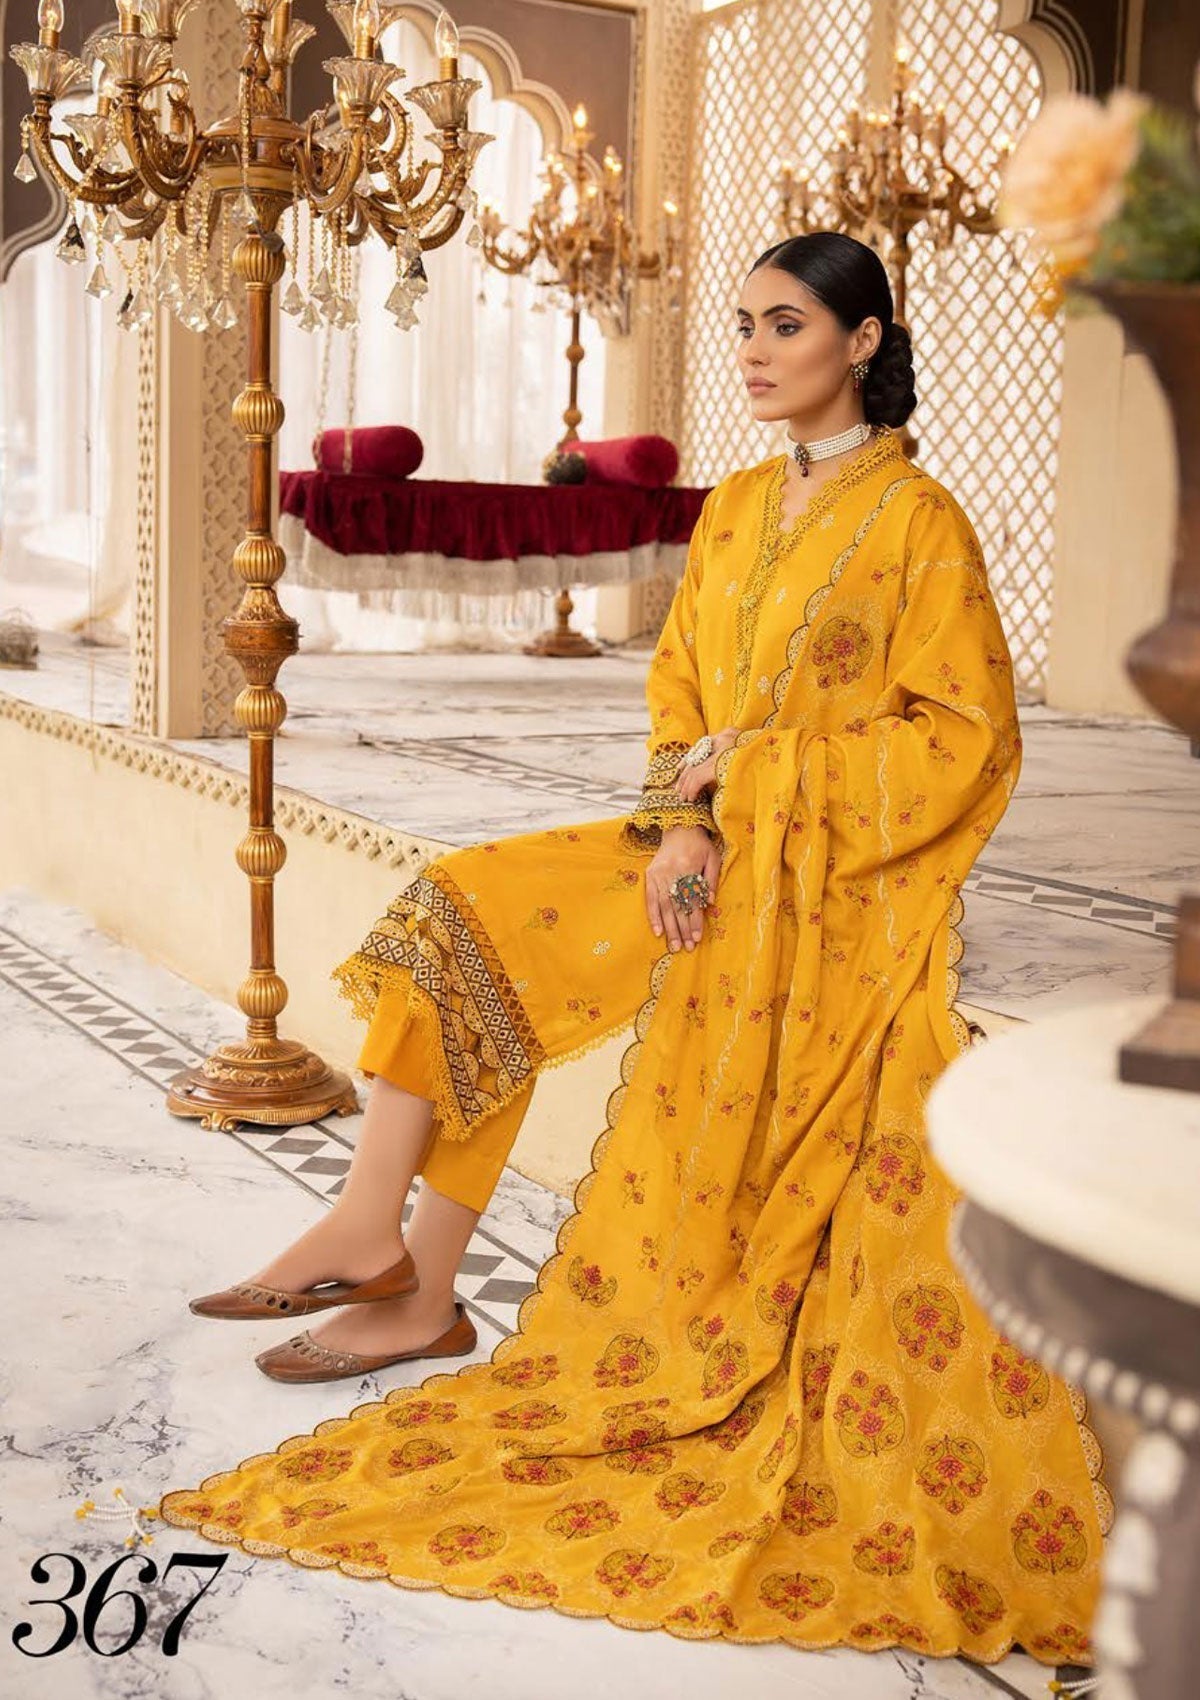 Winter Collection - Shaista - Khoobseerat - Karandi - SKK#367 available at Saleem Fabrics Traditions